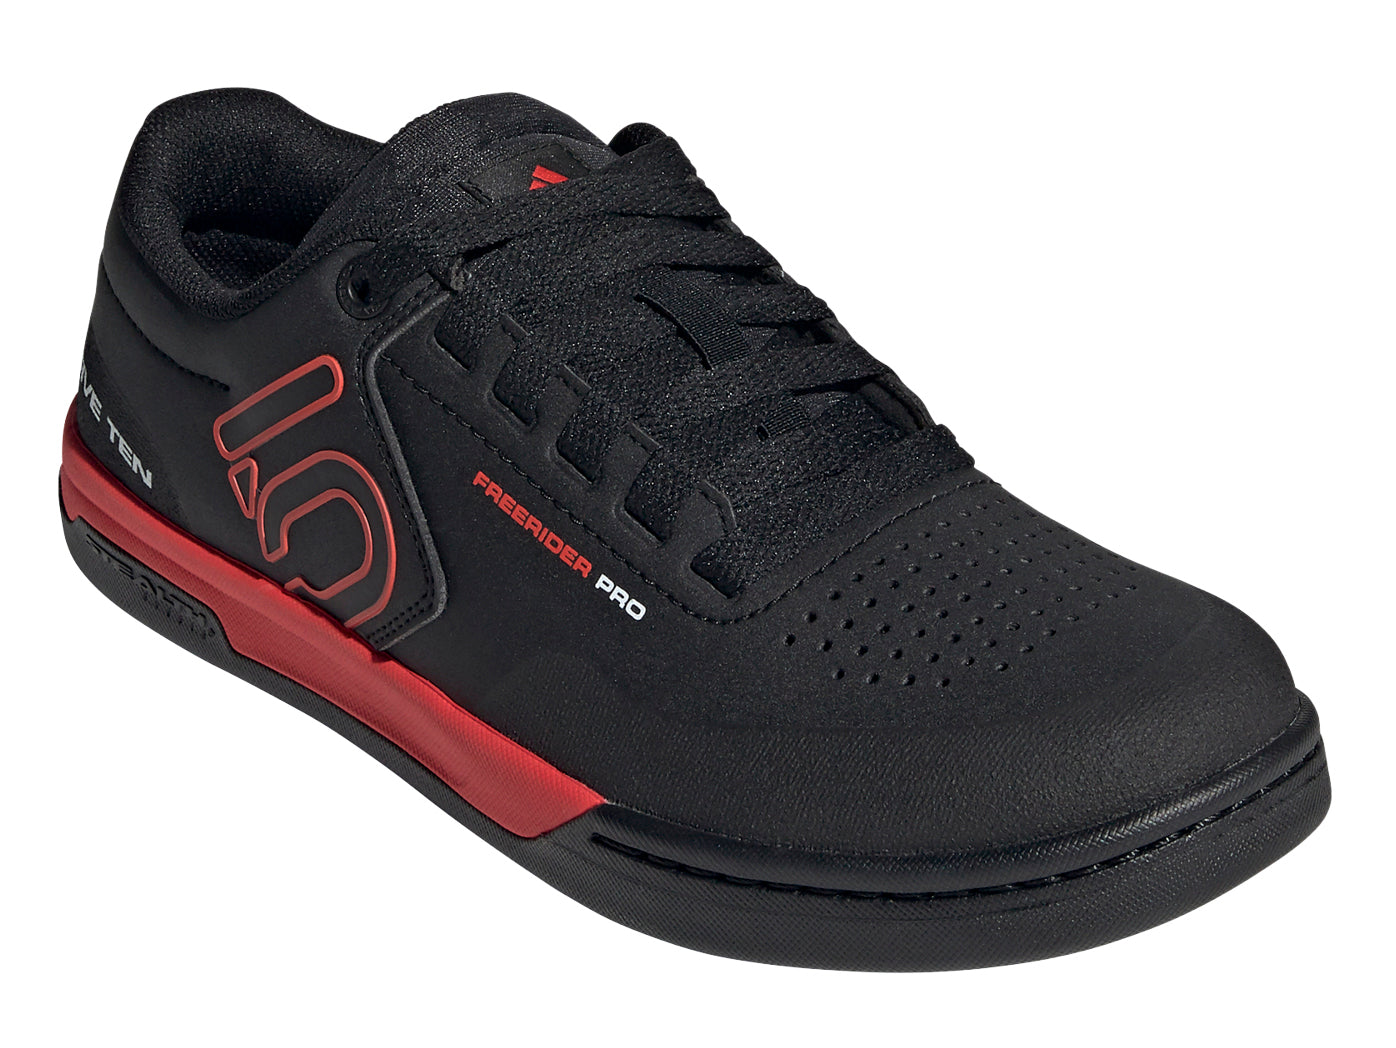 Men's Adidas Five Ten Freerider Pro Biking Shoe in Core Black/Core Black/Cloud White from the front